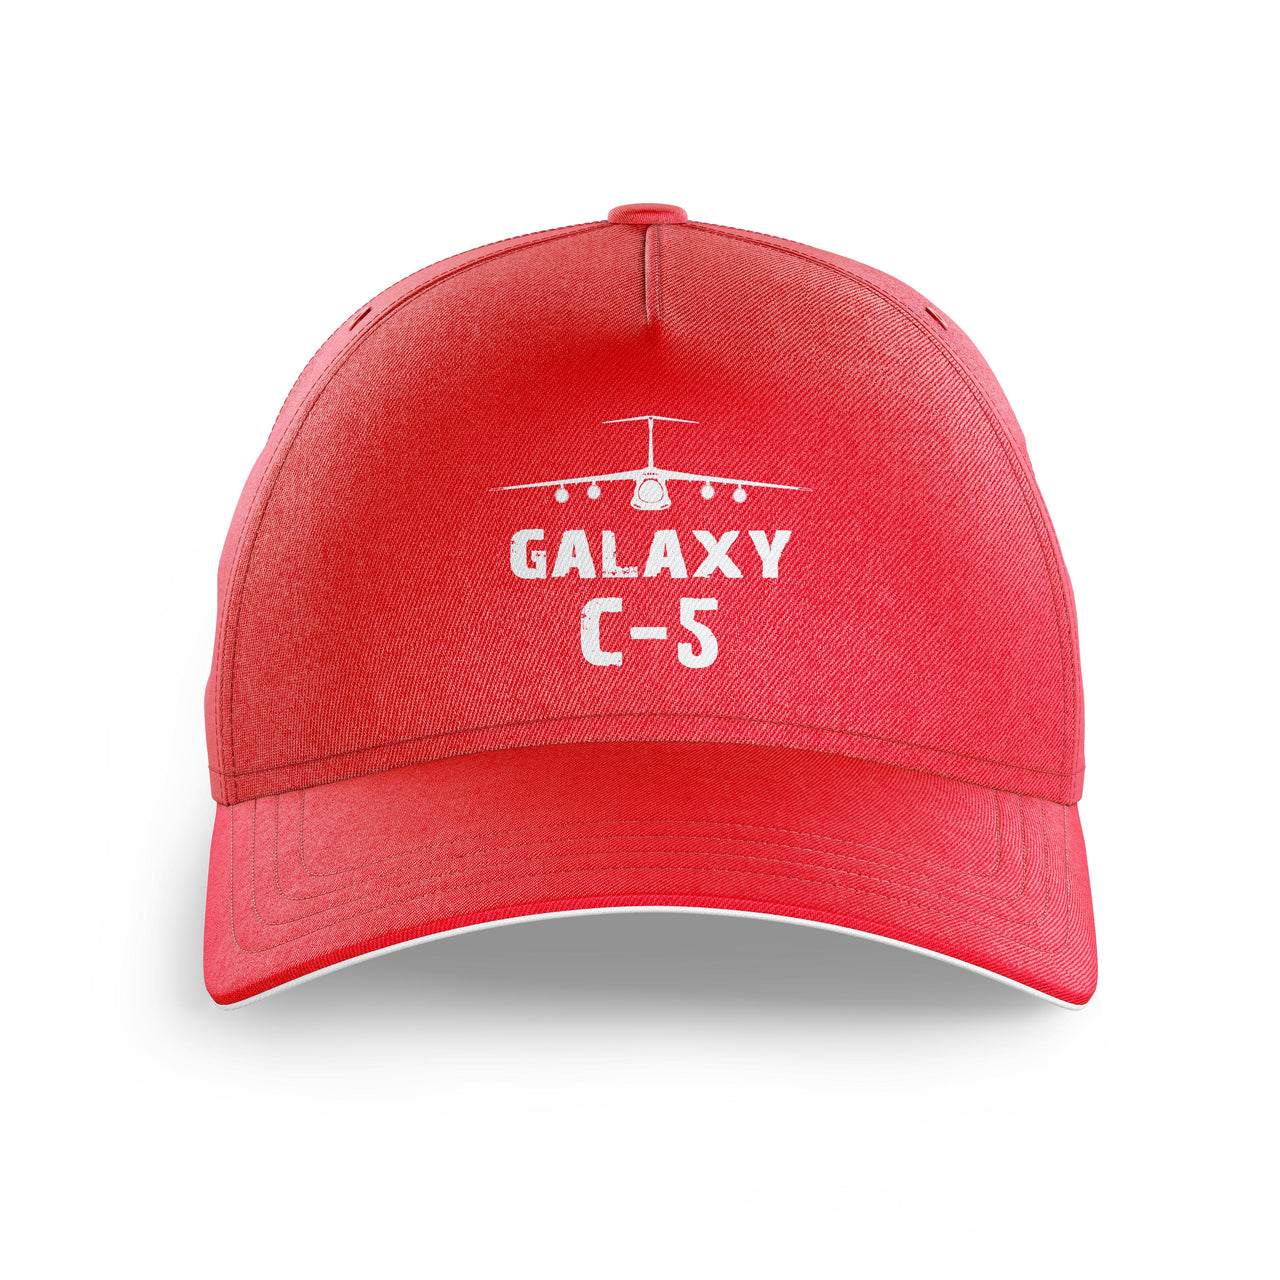 Galaxy C-5 & Plane Printed Hats